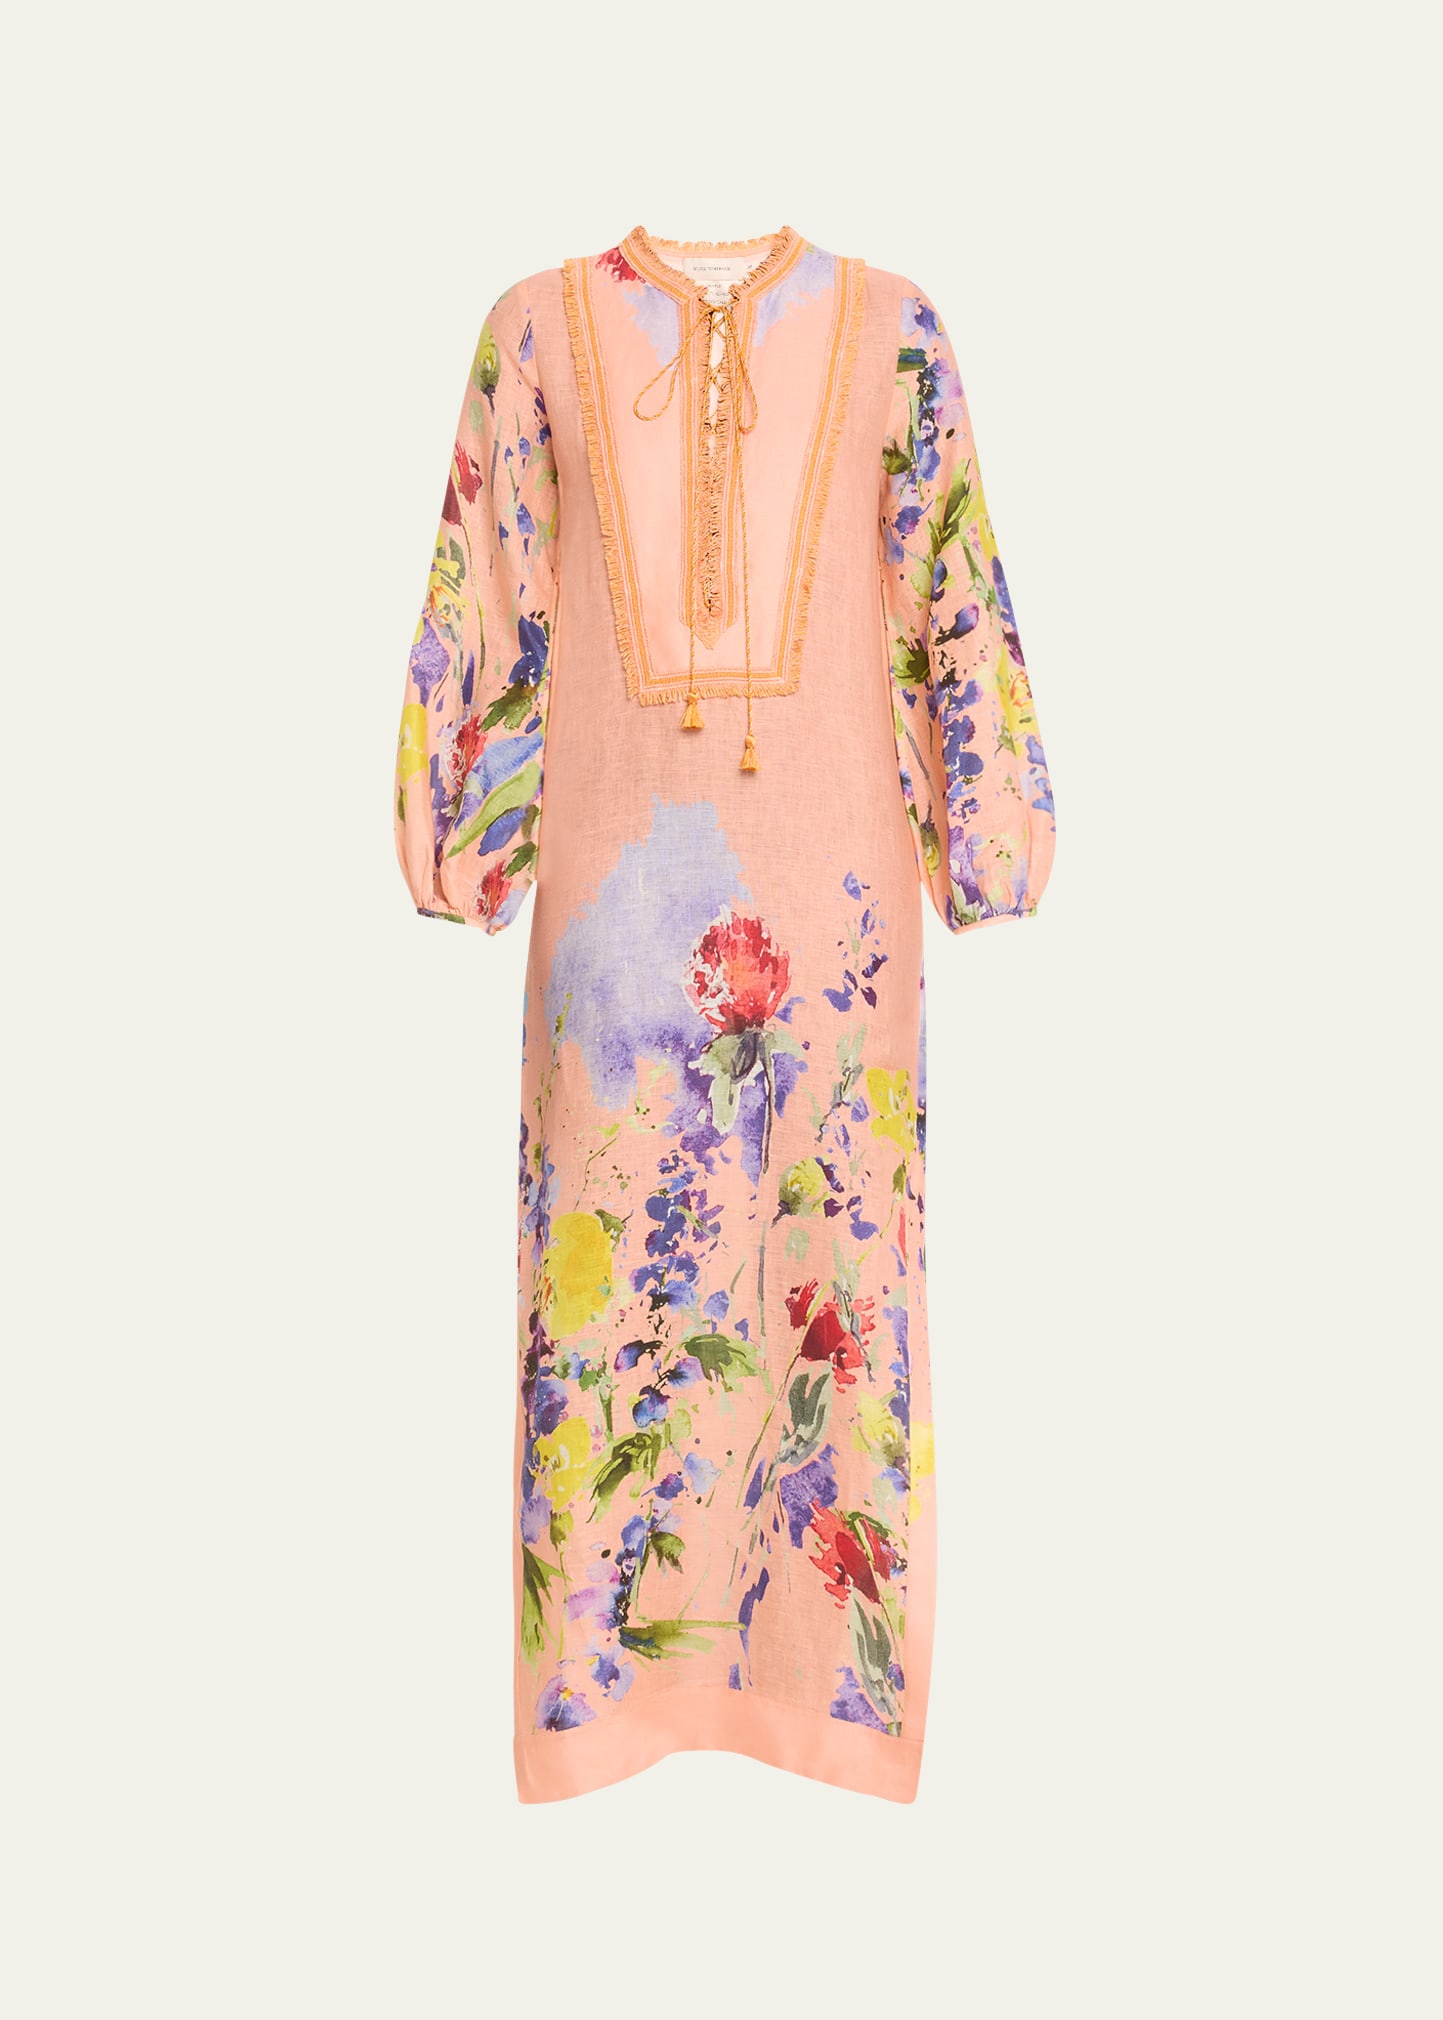 Silvia Tcherassi Isernia Floral Fringe-trim Lace-up Linen Tunic In Apricot Spring Ga